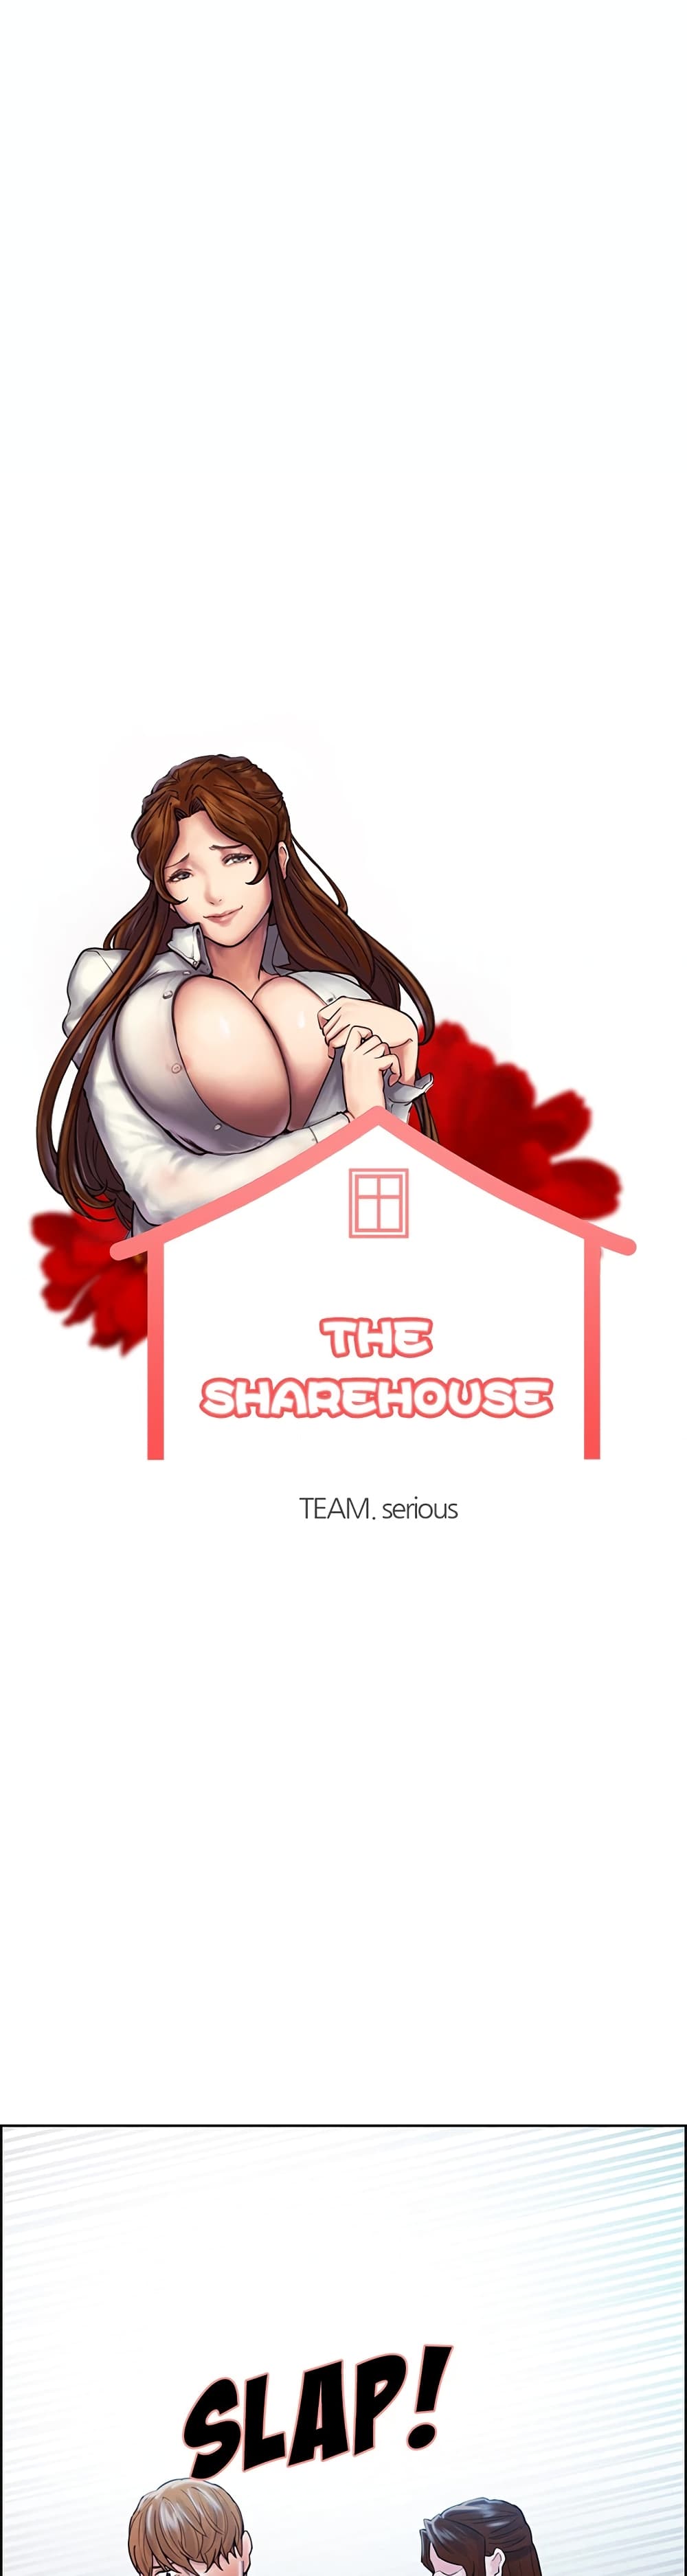 The Sharehouse 35 (1)